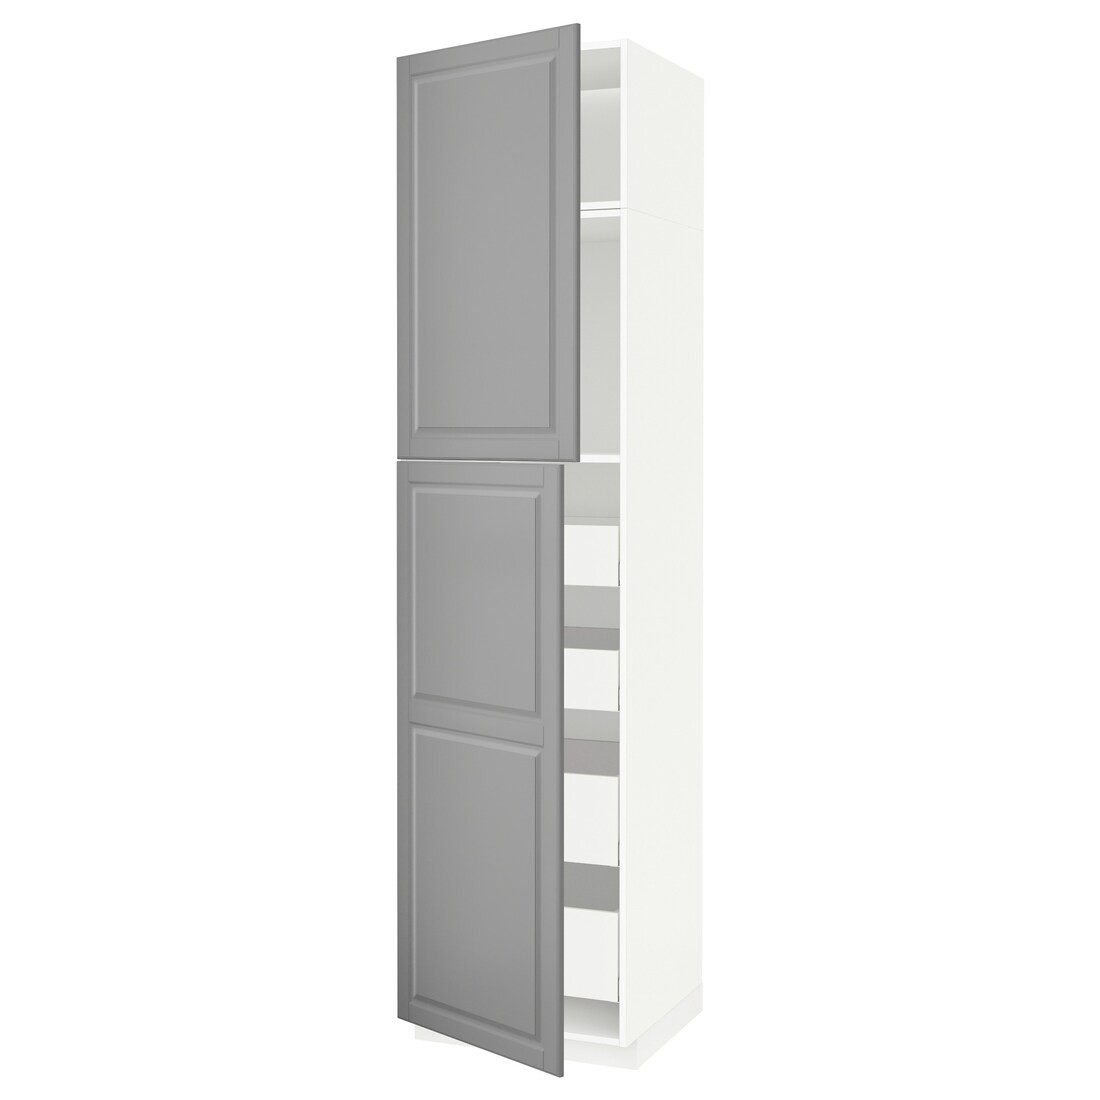 IKEA METOD МЕТОД / MAXIMERA МАКСИМЕРА Шкаф высокий 2 двери / 4 ящика, белый / Bodbyn серый, 60x60x240 см 29460968 294.609.68